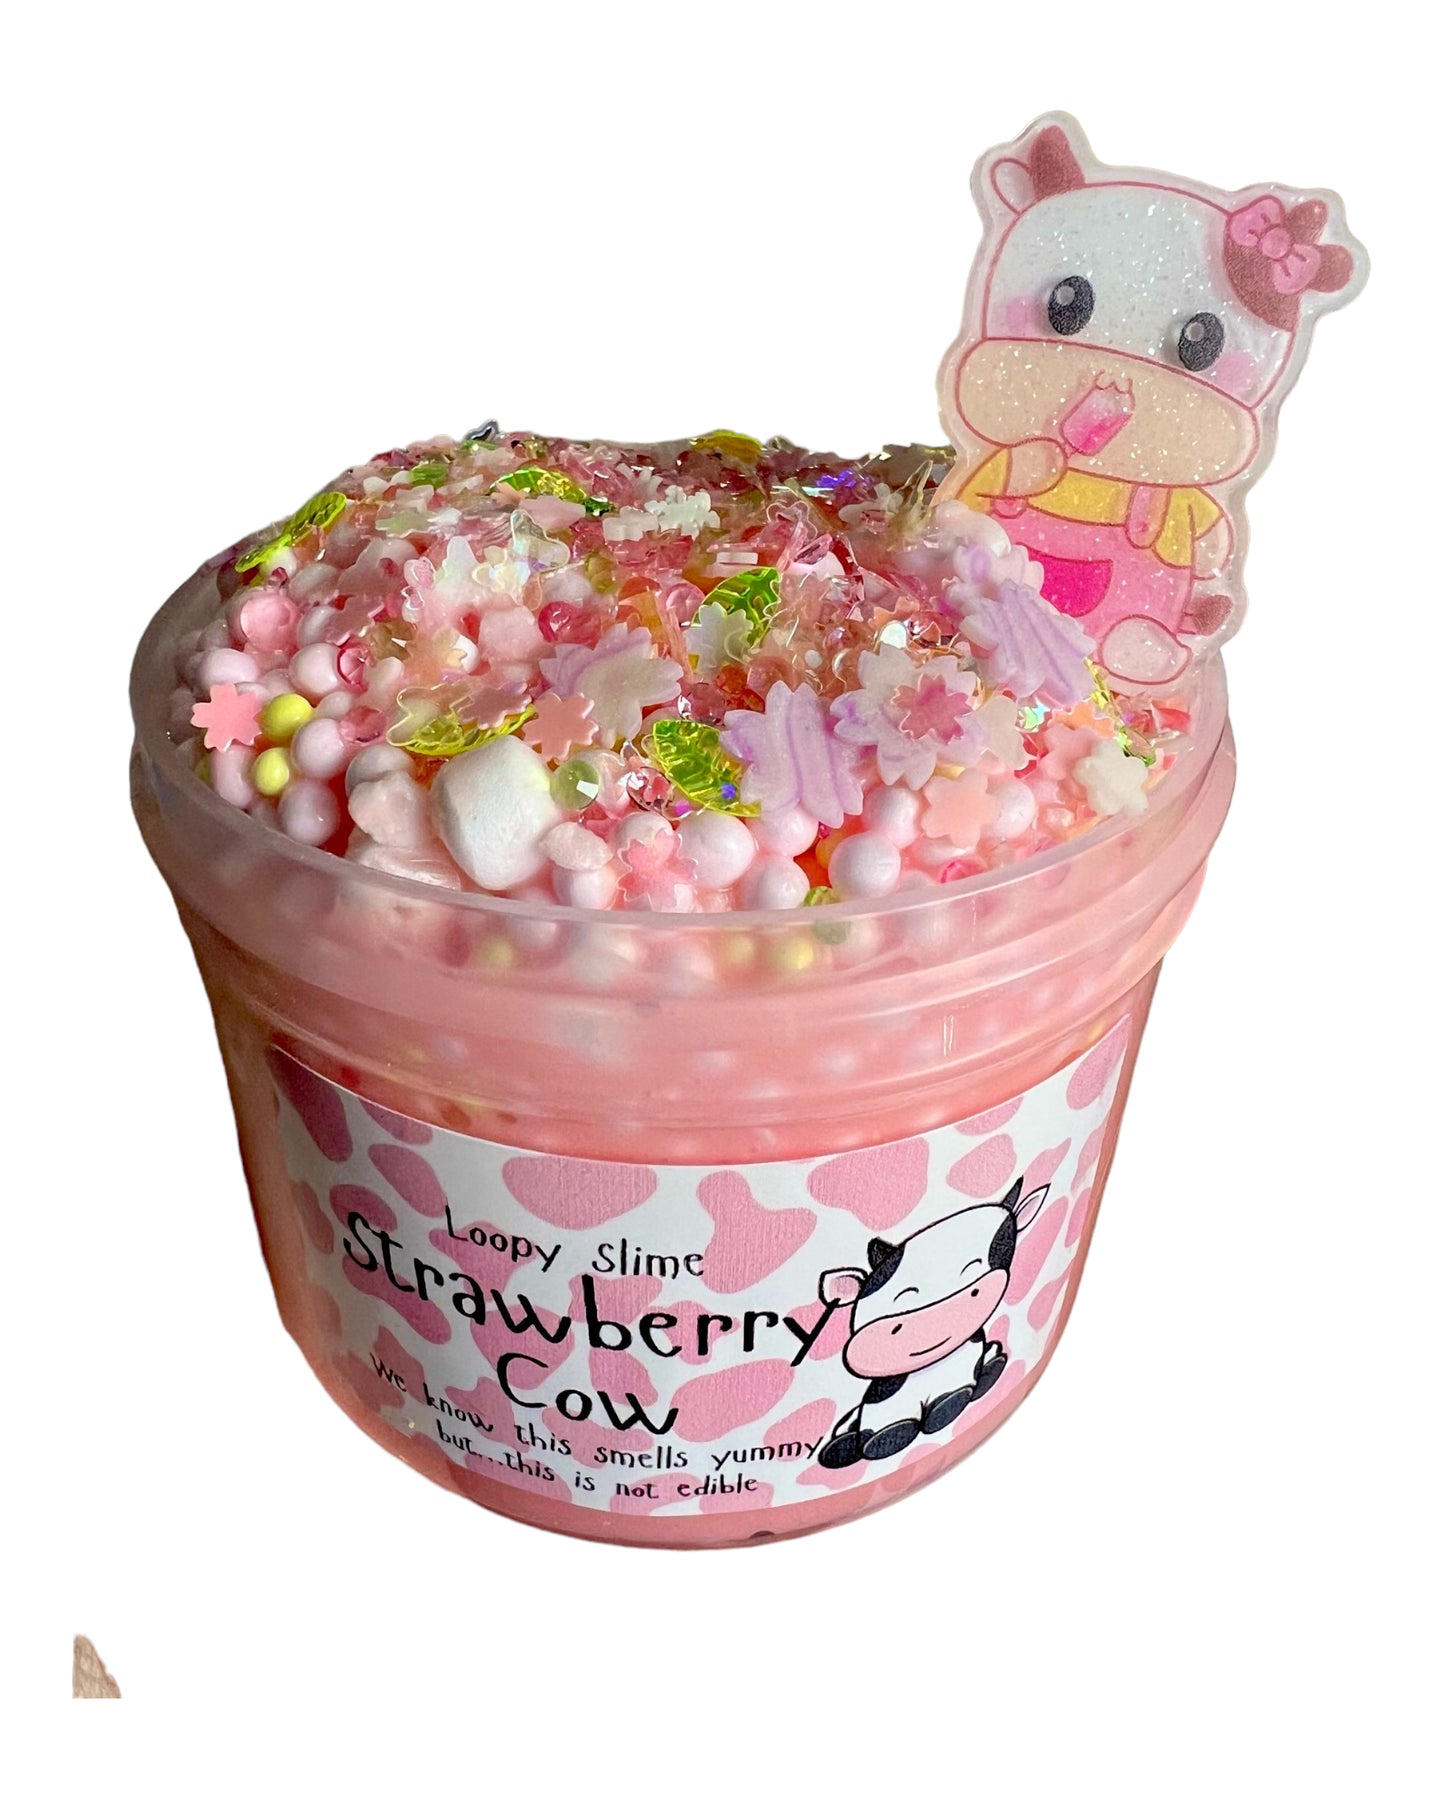 Strawberry Cow floam bead slime